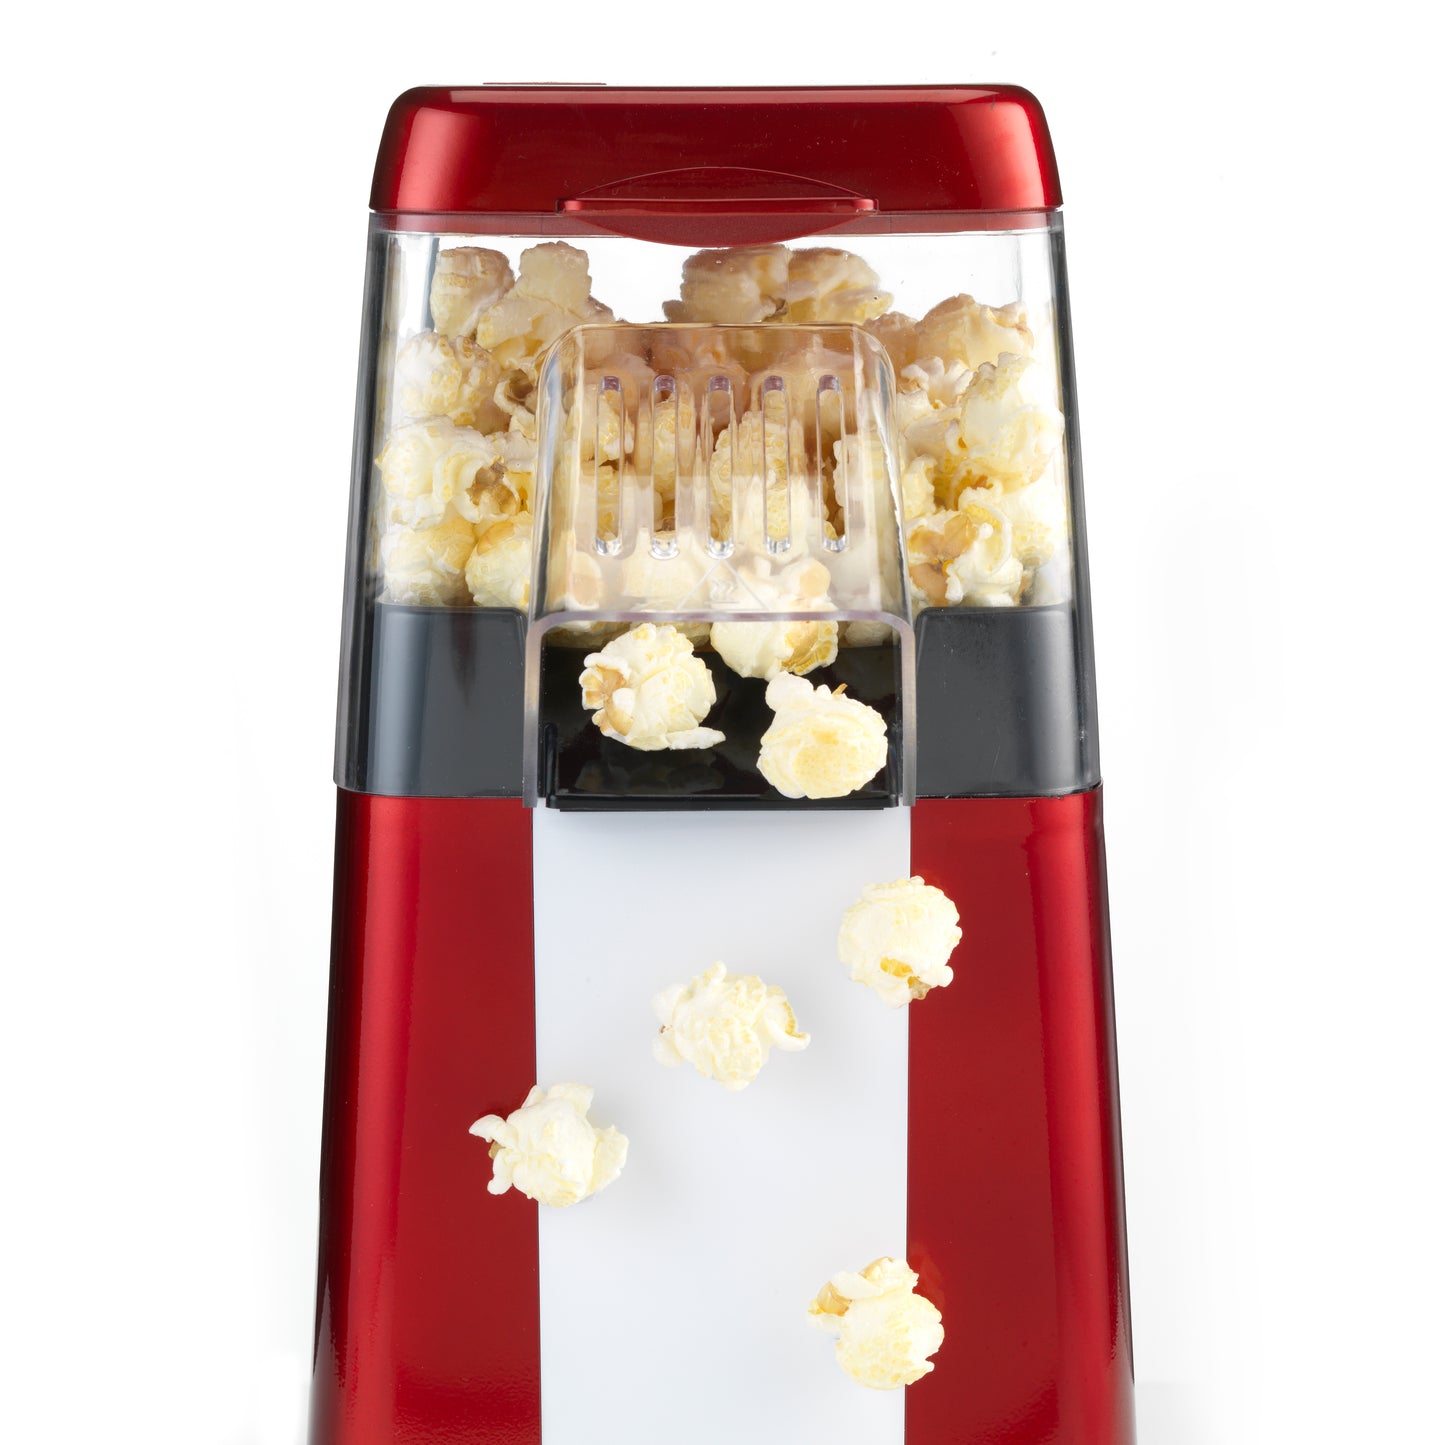 Trebs 99387 - Popcorn machine - Retro Red